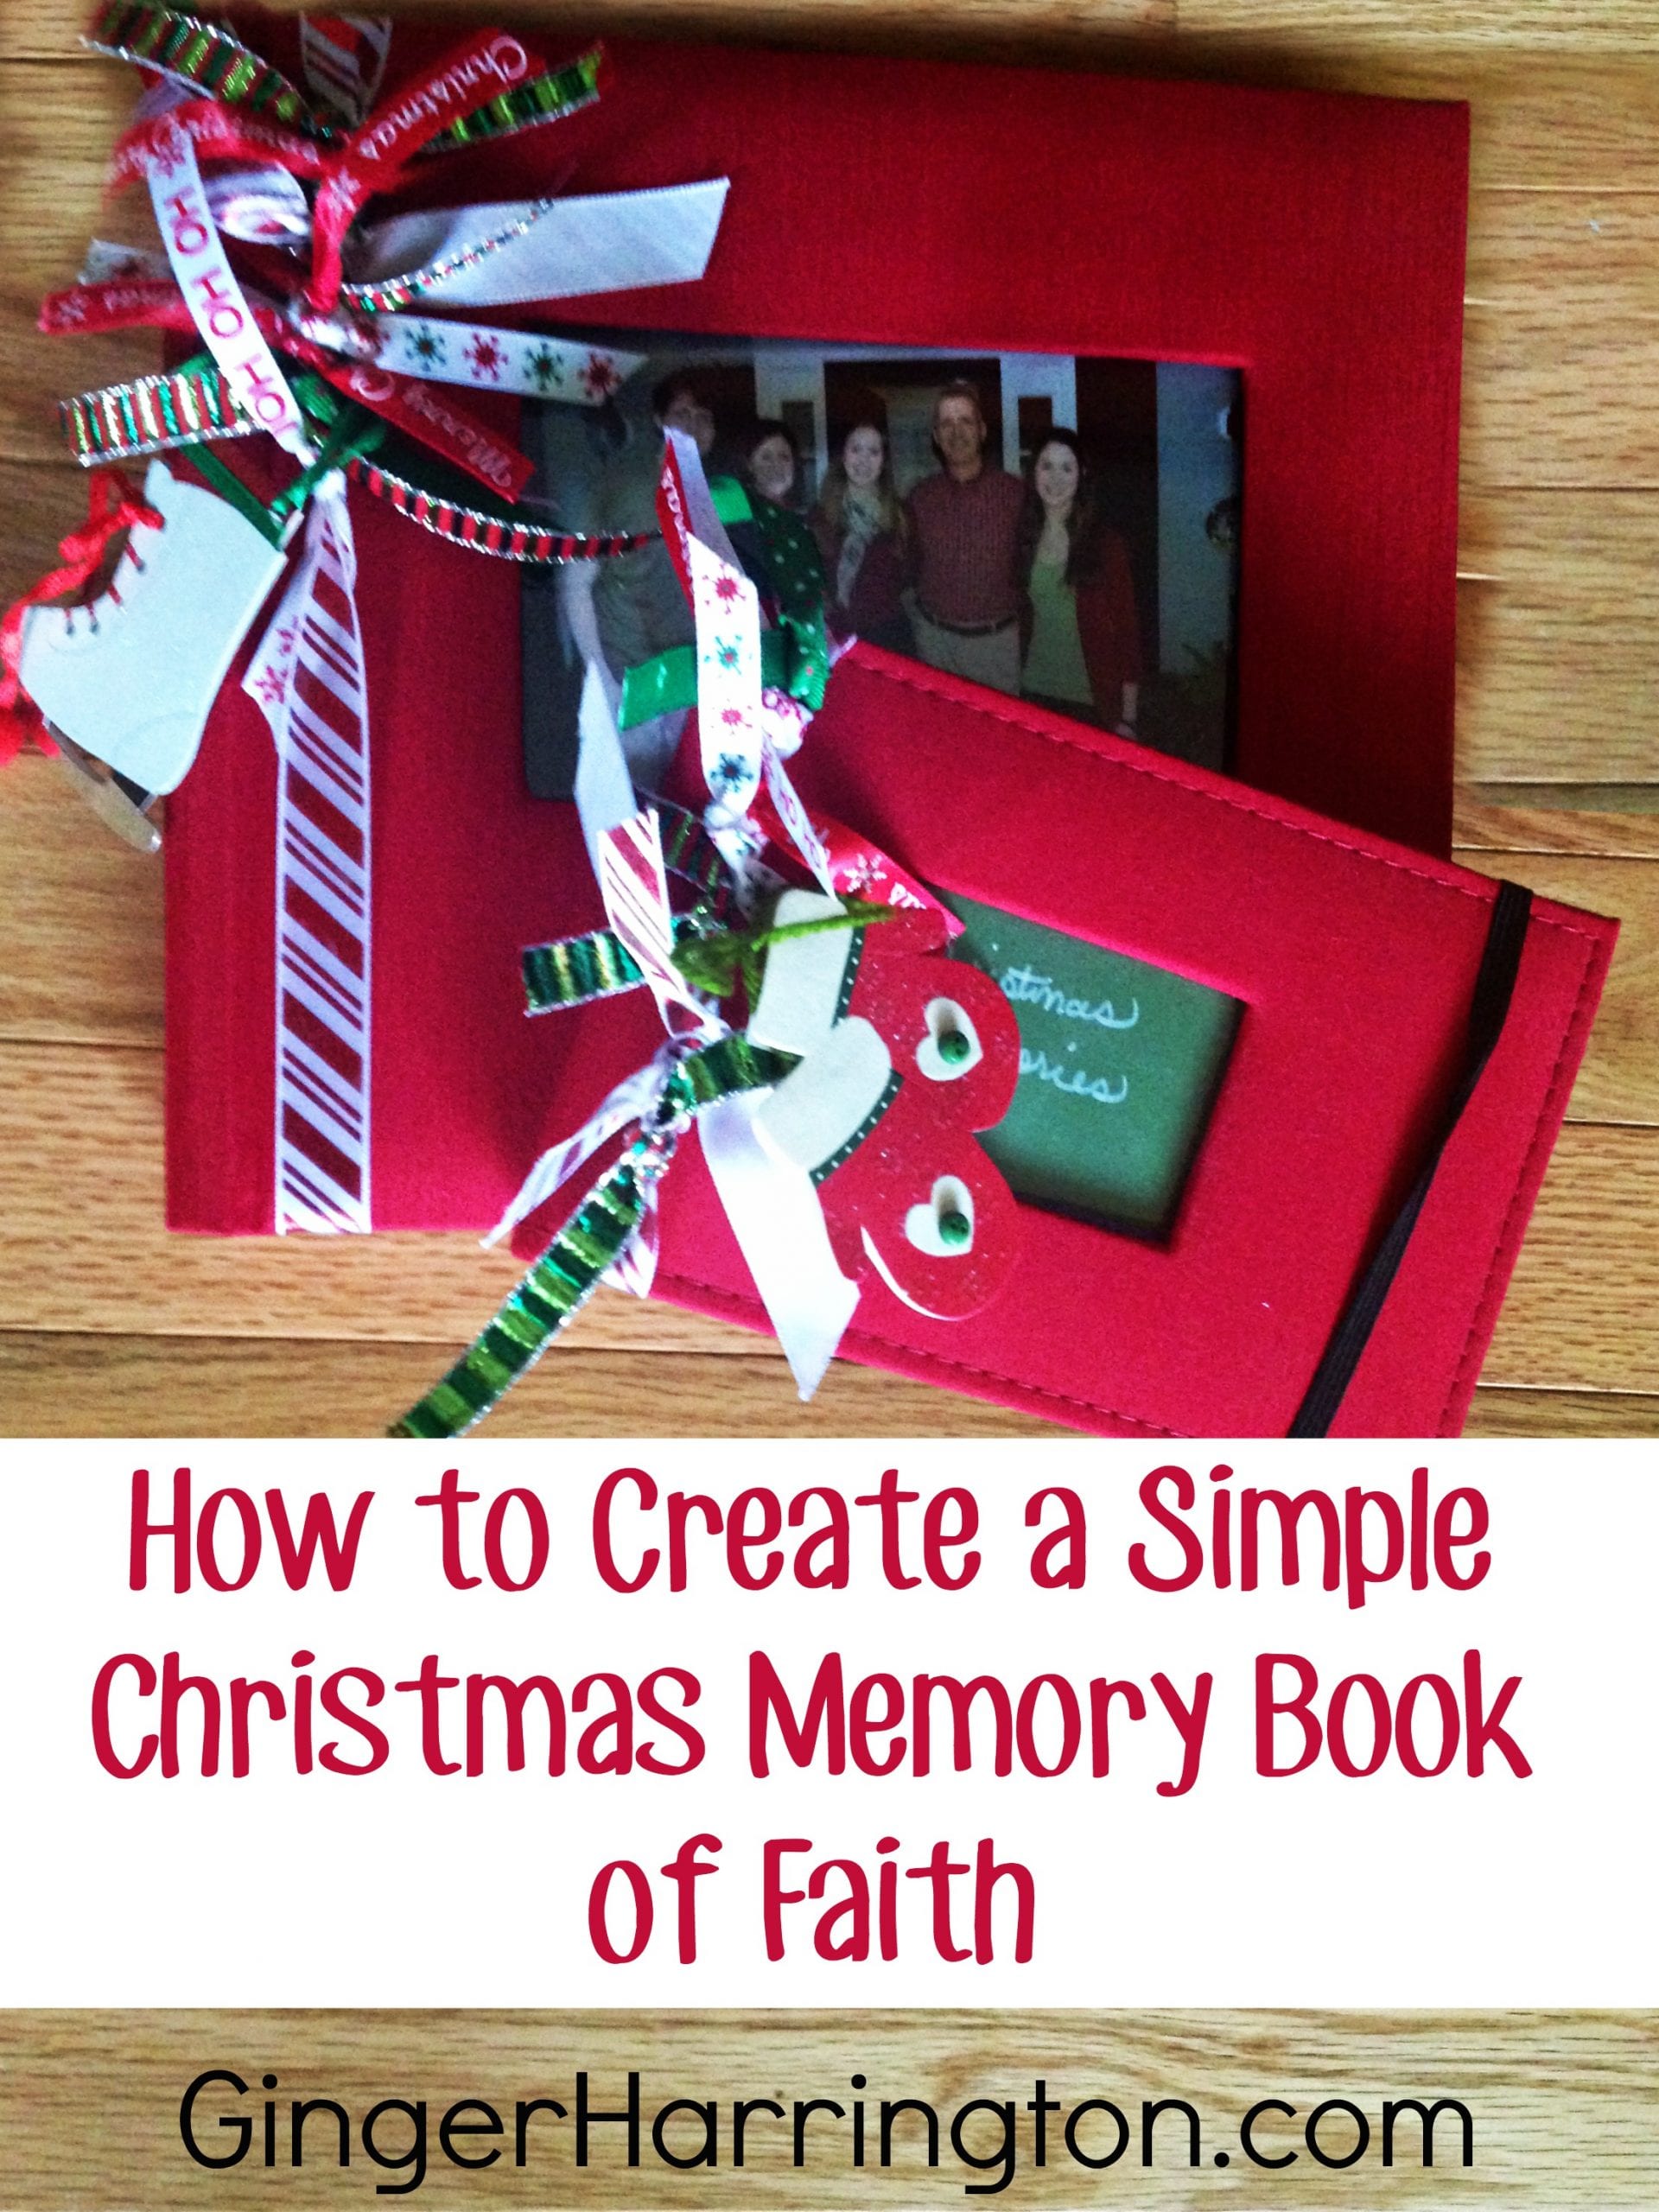 How to Create a Christmas Memory Book of Faith